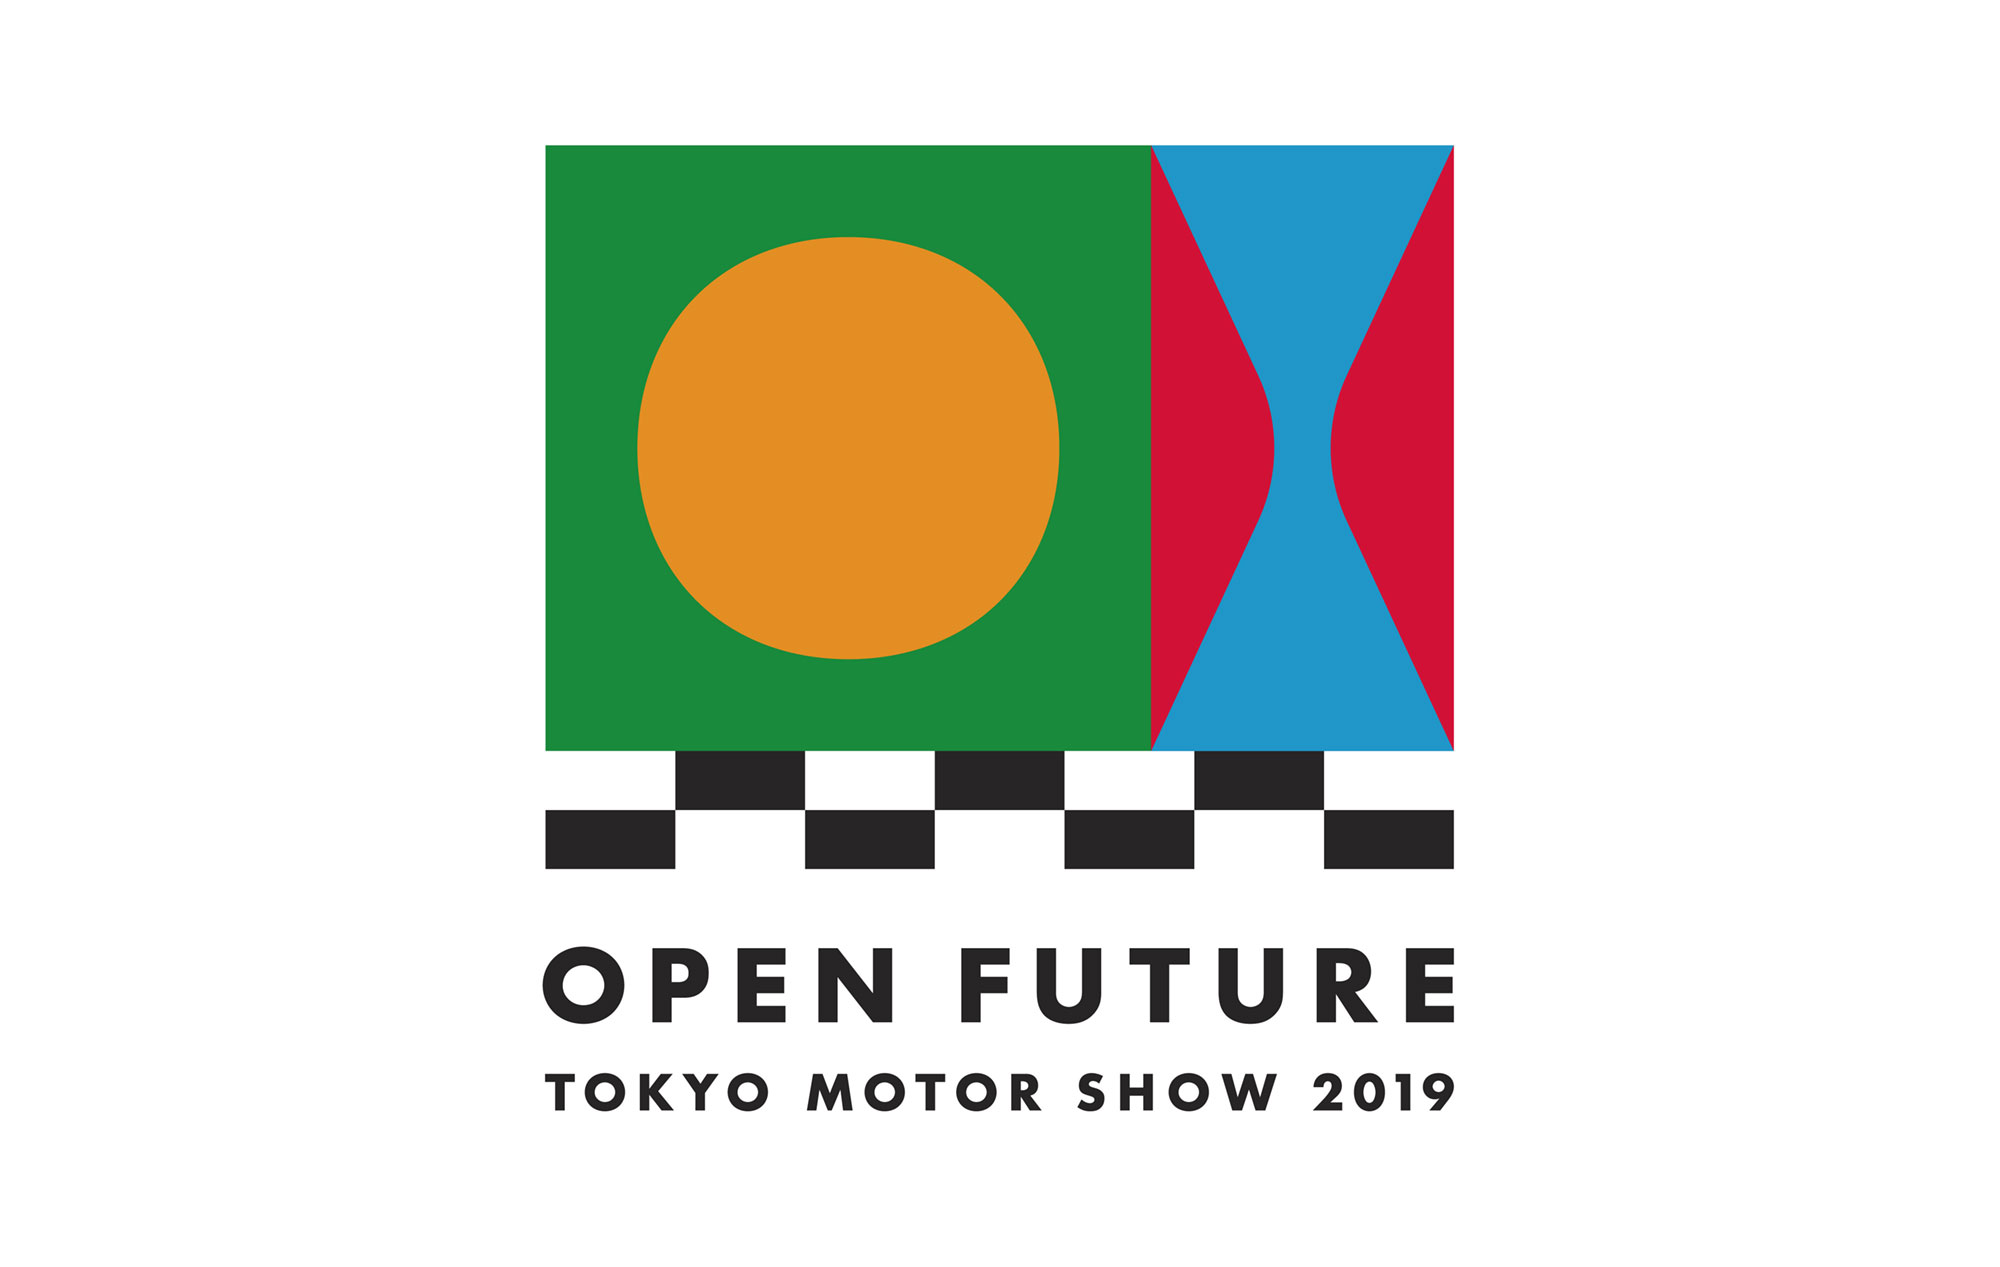 TOKYO MOTOR SHOW 2019